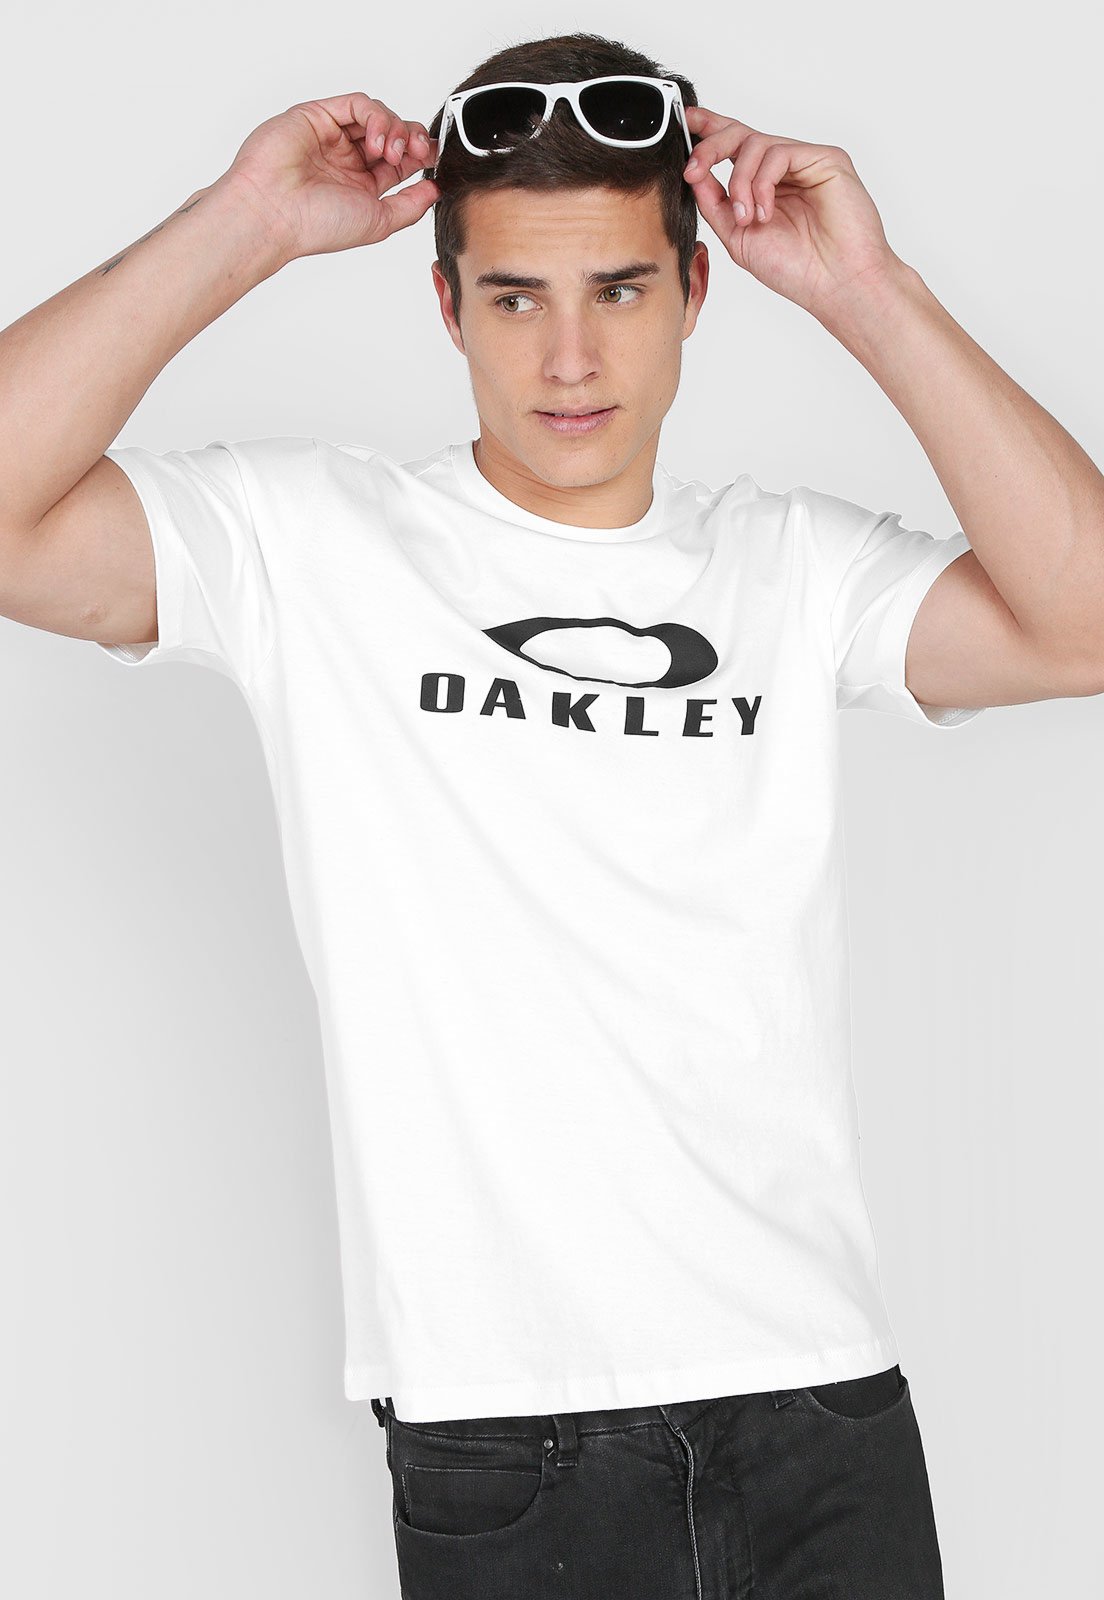 Oakley Camiseta Premium Quality - Branco/Branco